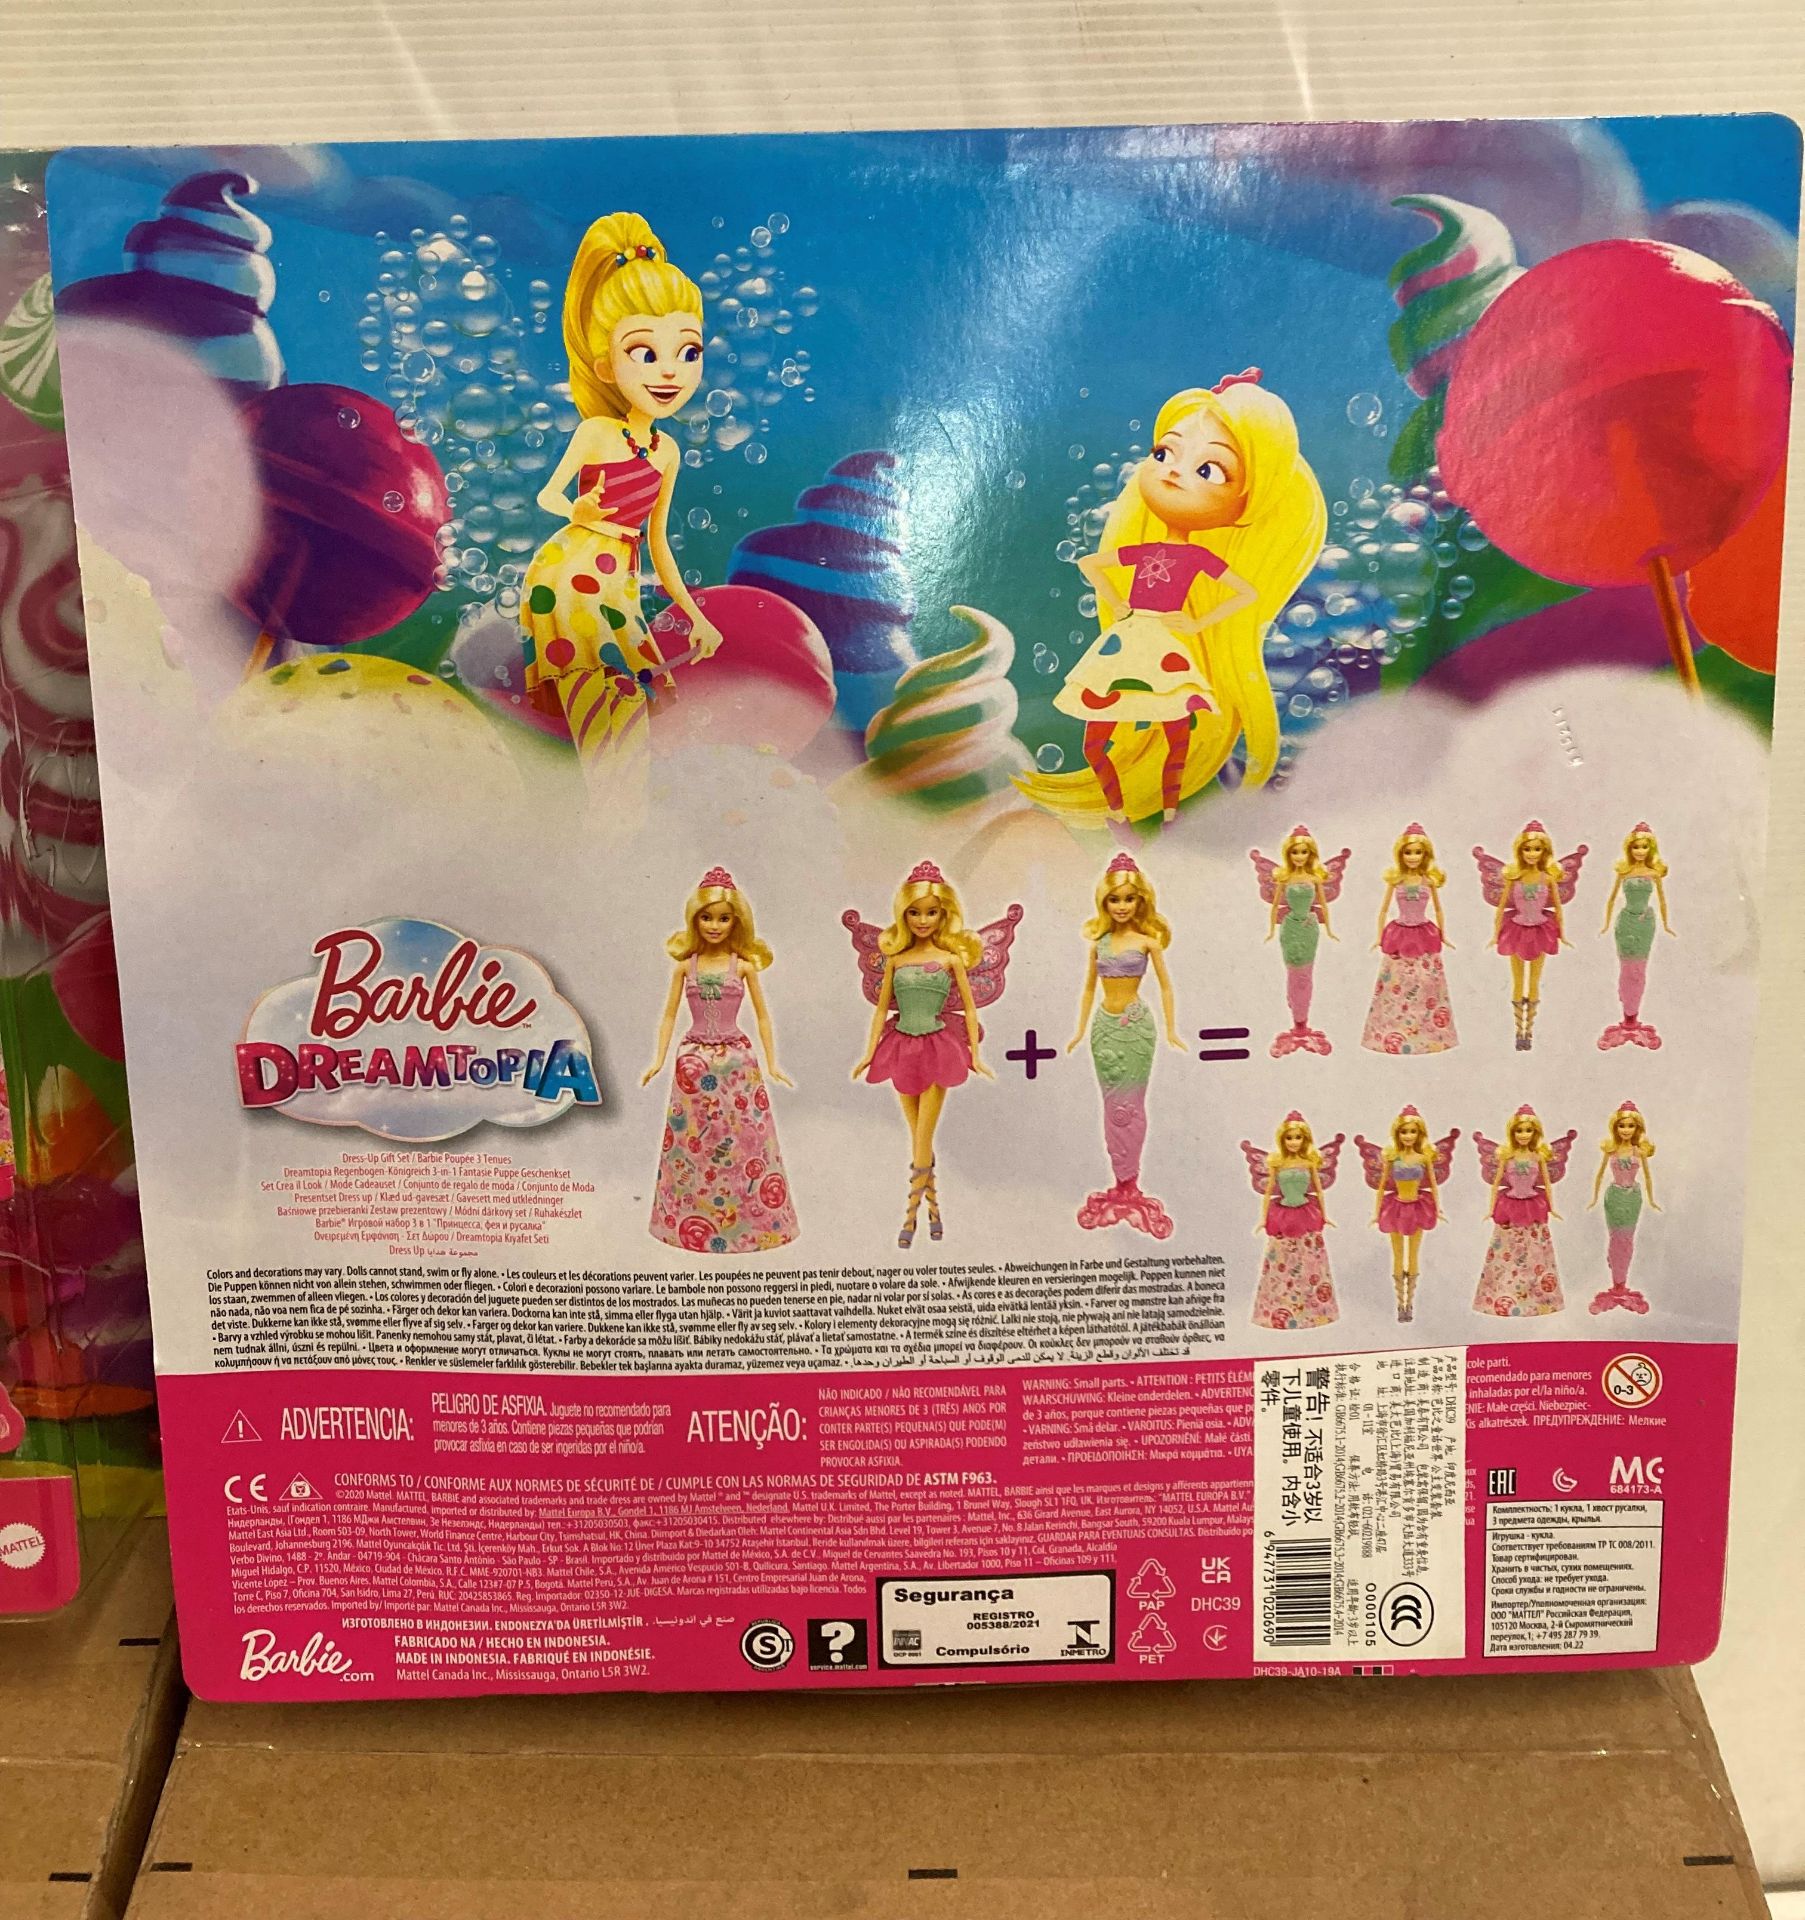 8 x Barbie Dreamtopia doll and accessories (2 x outer boxes) (saleroom location: M08) - Bild 3 aus 3